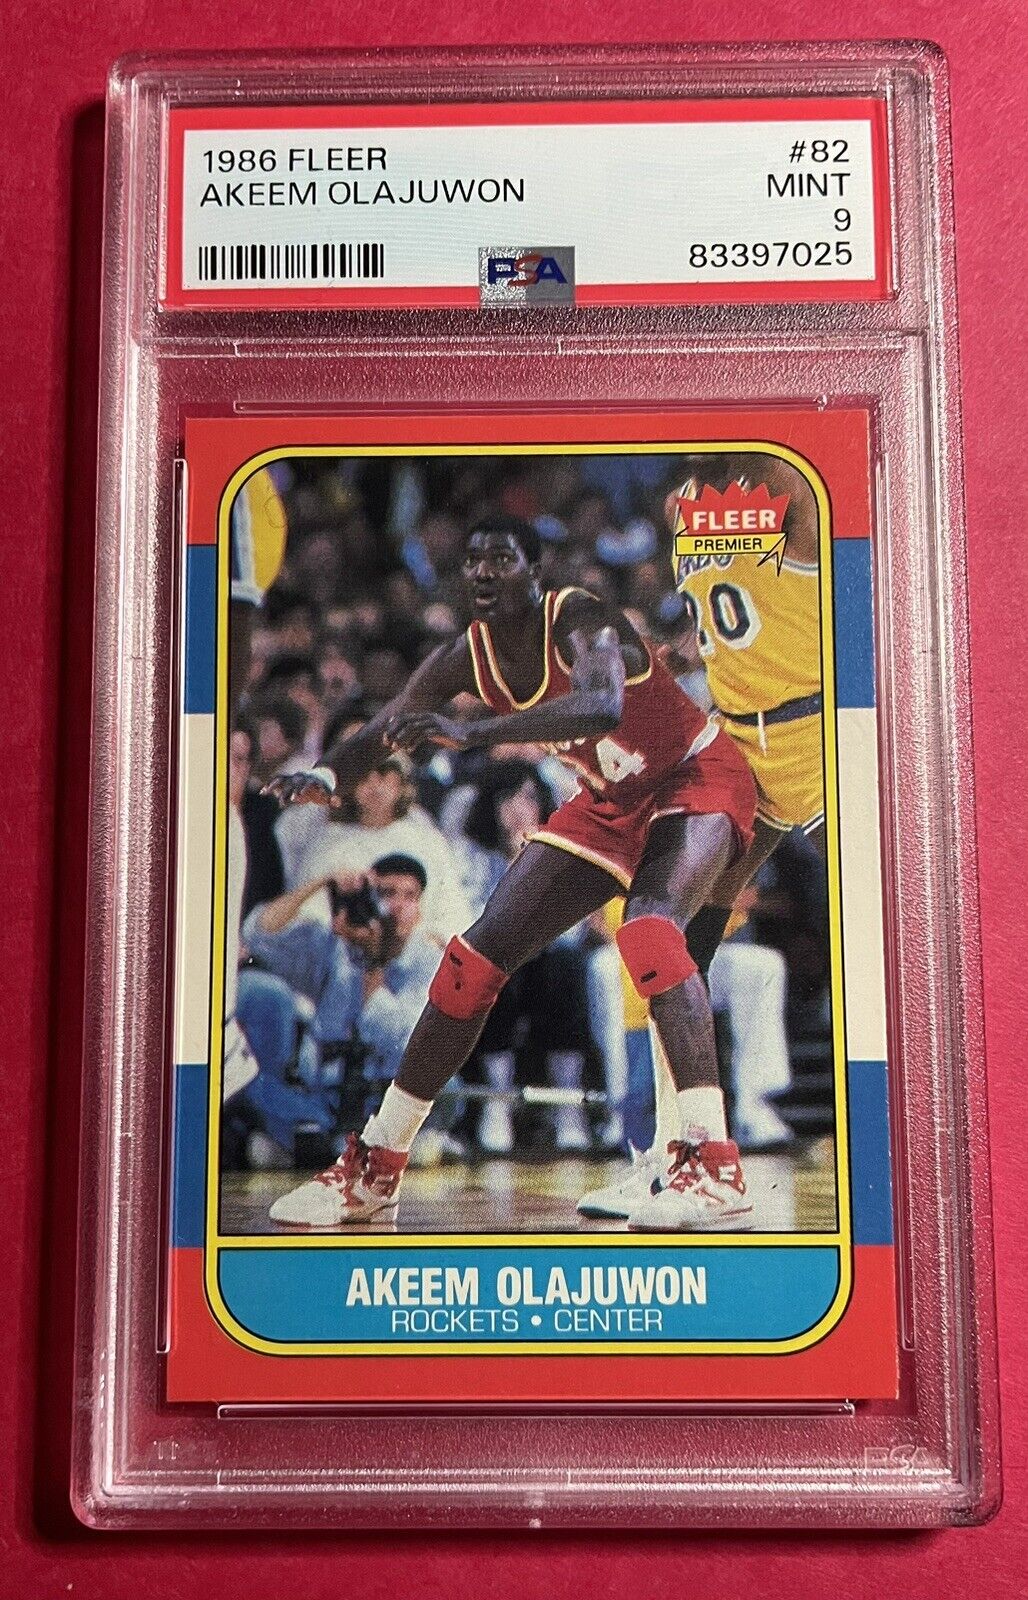 1986 '86 Fleer Akeem Olajuwon #82 Rookie Card PSA 9 MINT Newly Graded